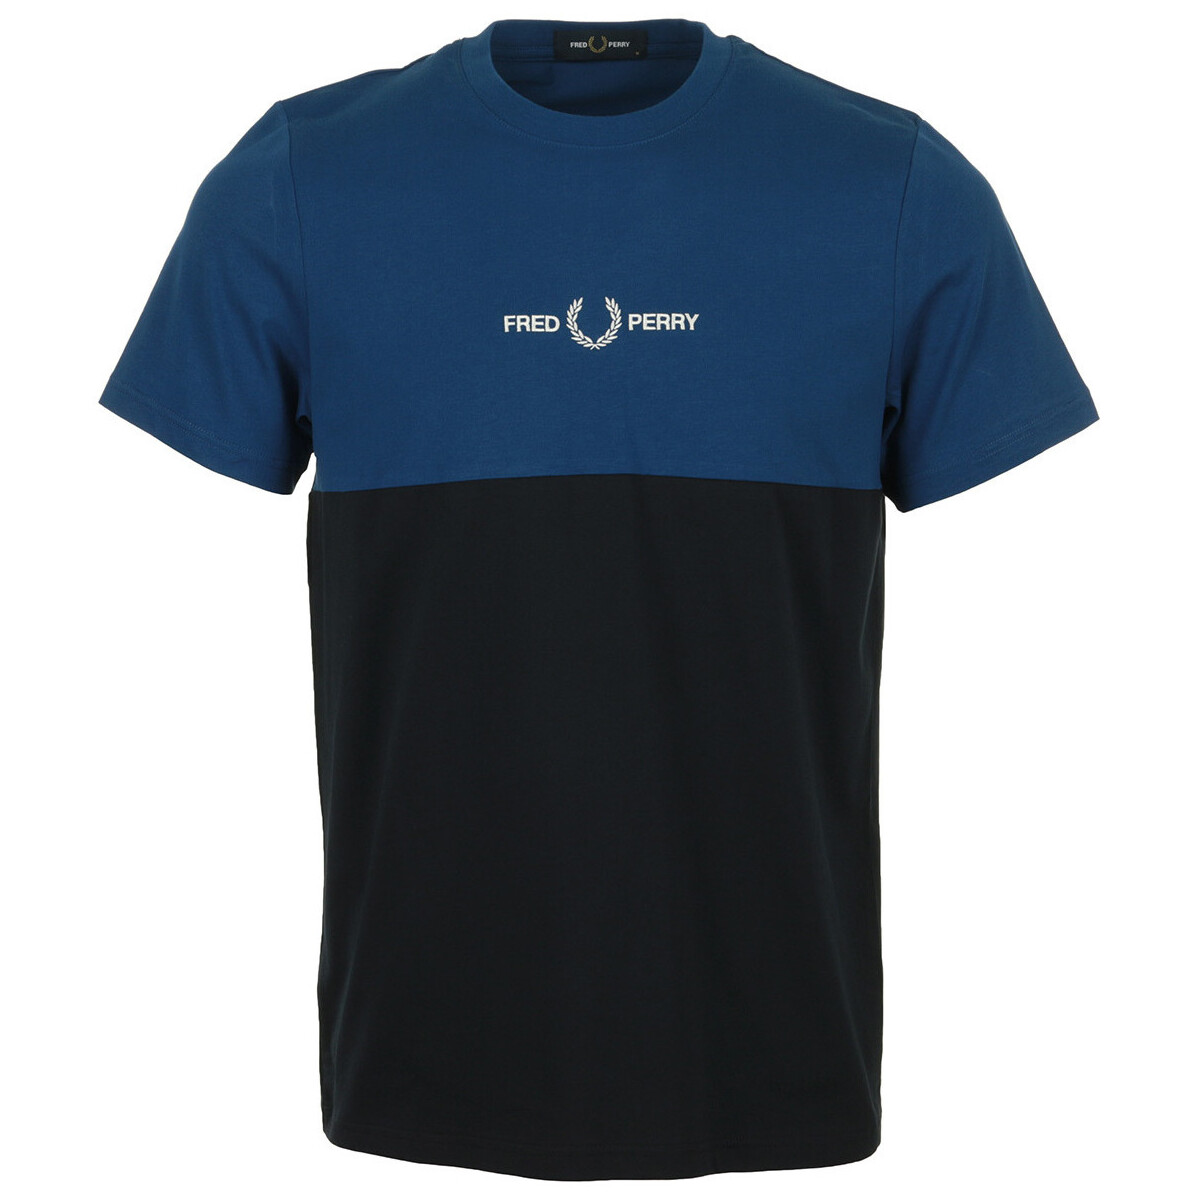 Vêtements Homme T-shirts manches courtes Fred Perry Branded Colour Block T-Shirt Bleu